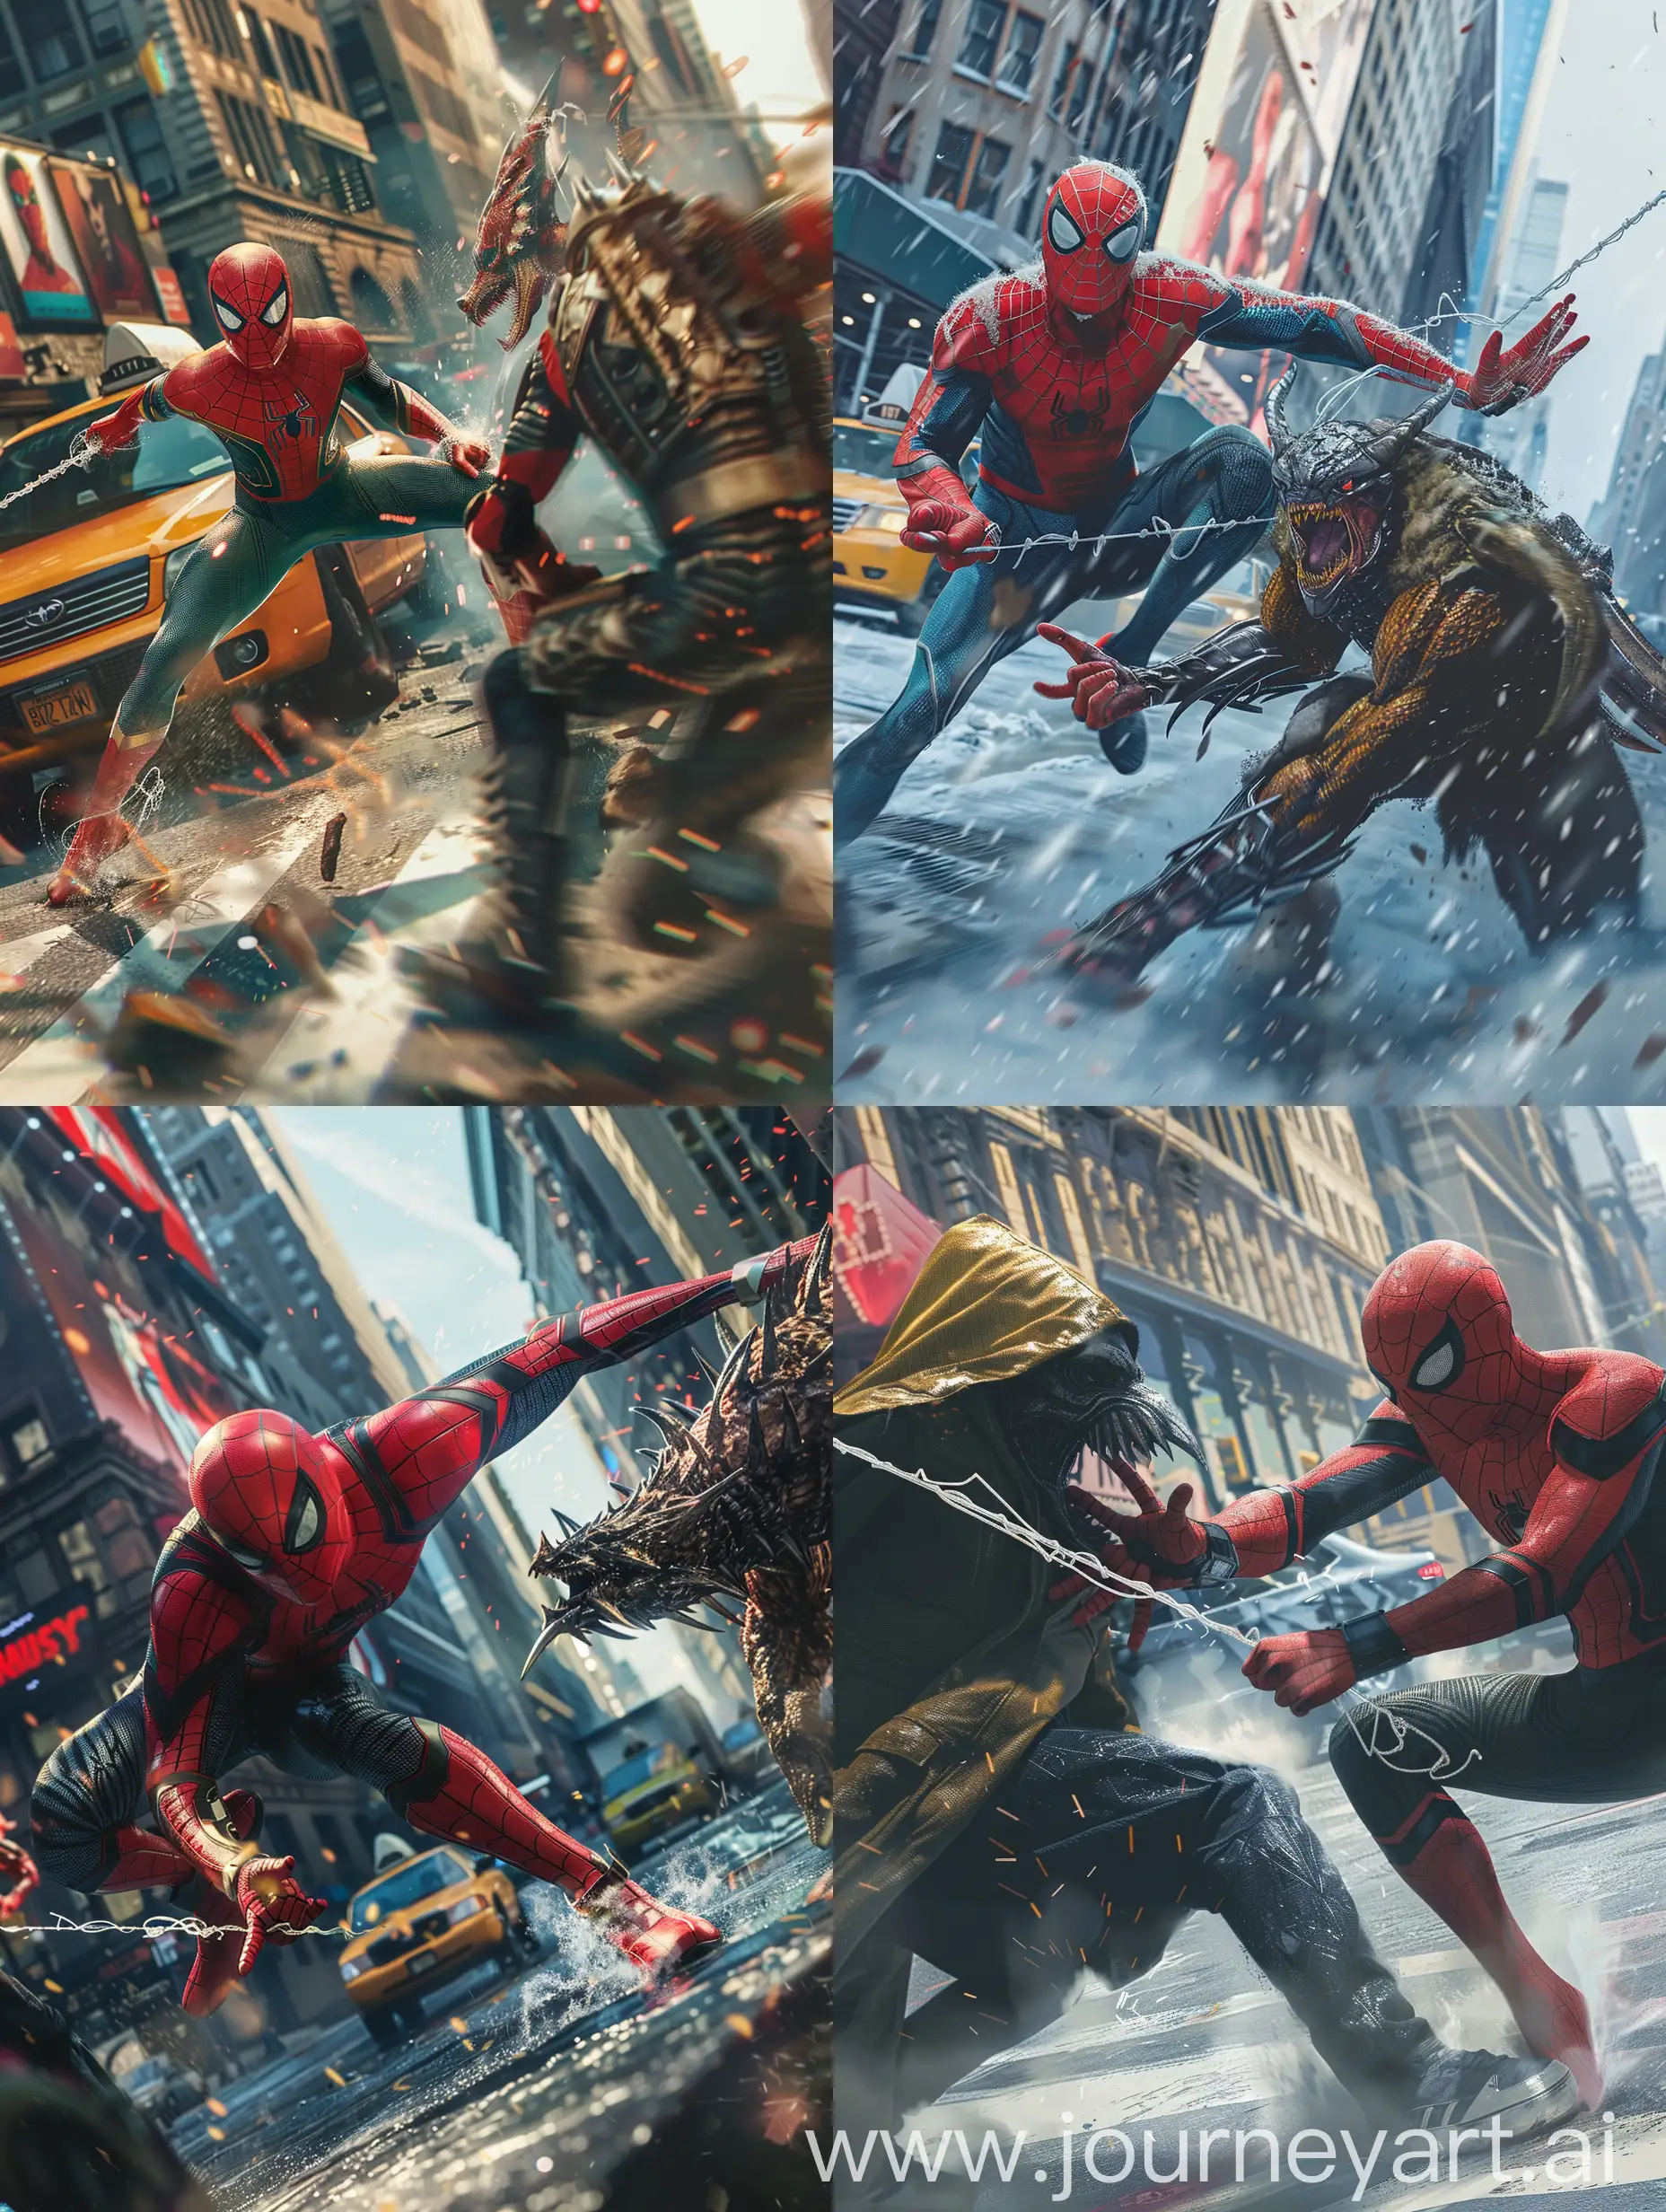 Spider-Man fighting kraven the hunter in SCI FI battle in New York street. (8K) ((ULTRA DETAILED))
